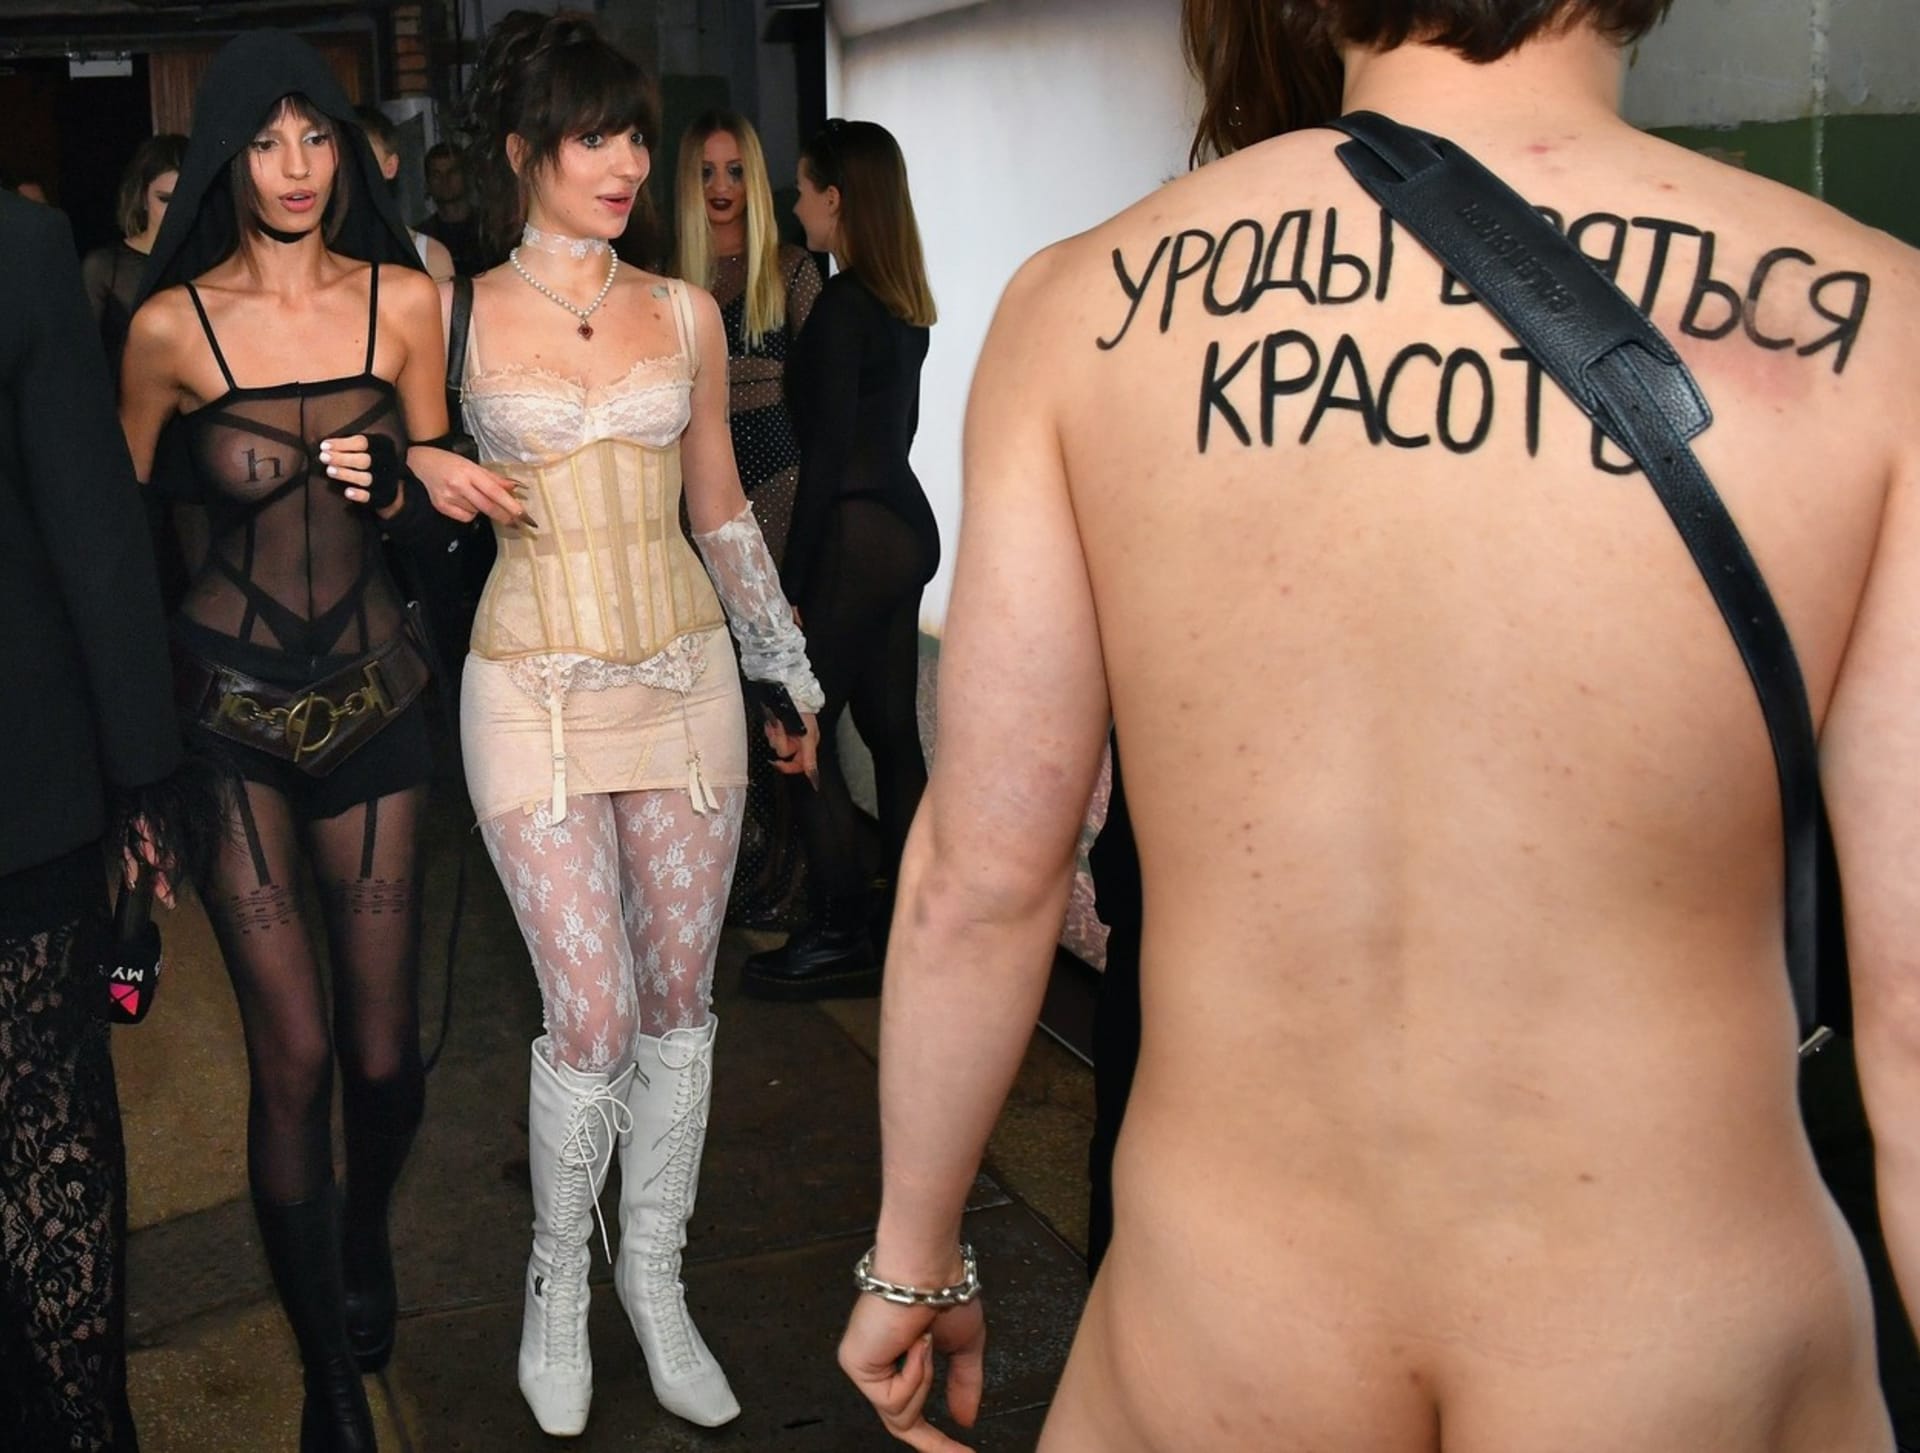 Ruský večírek „téměř nahých“ skončil vězením i žalobou.